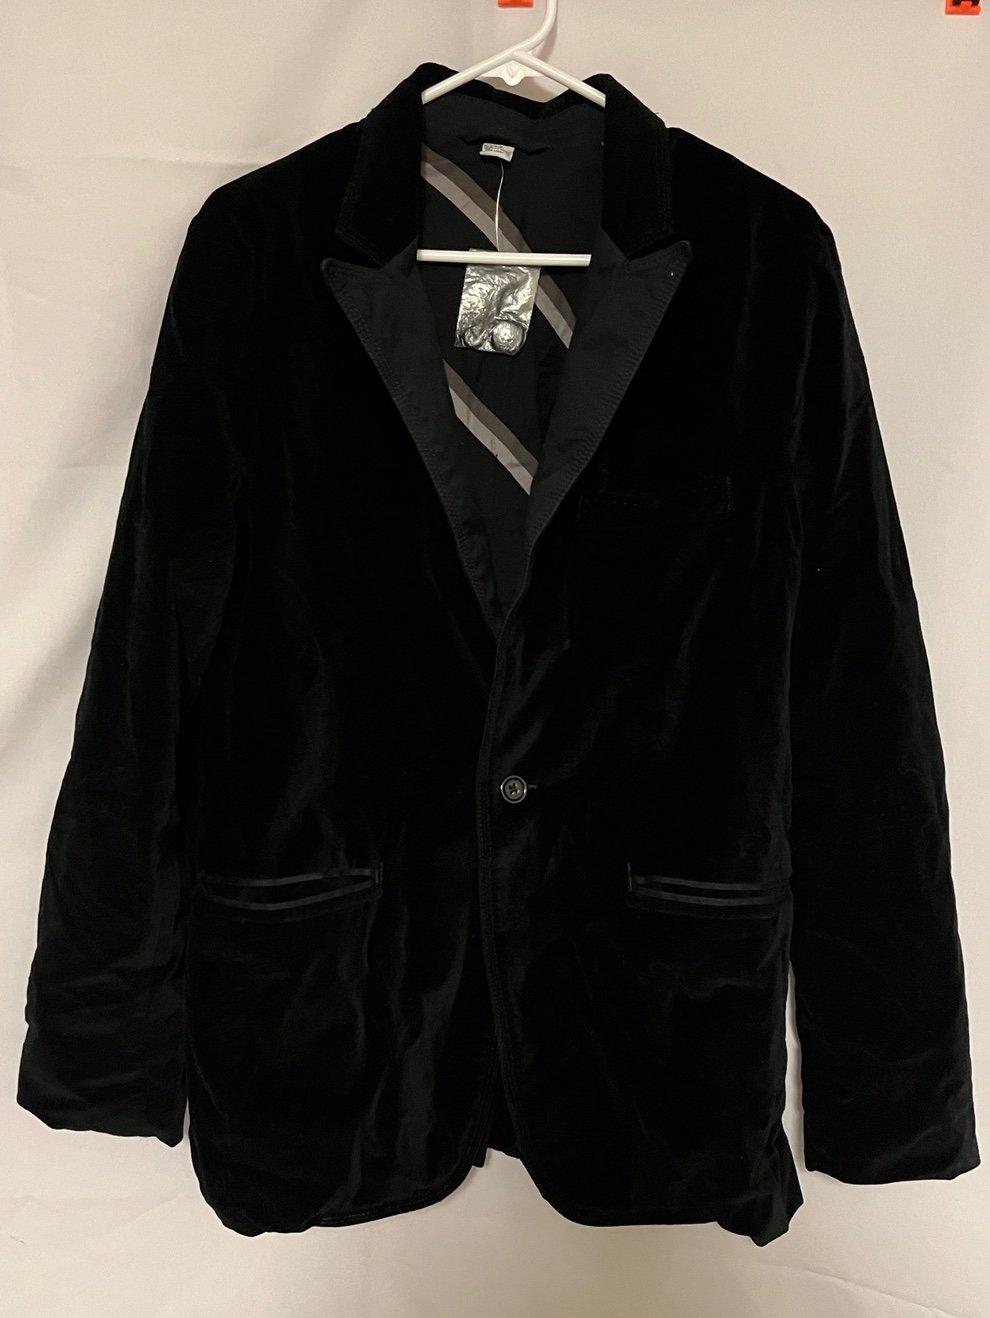 Vintage Suede Suit Jacket Blazer Coat Size Small 38 CinTIr9tv